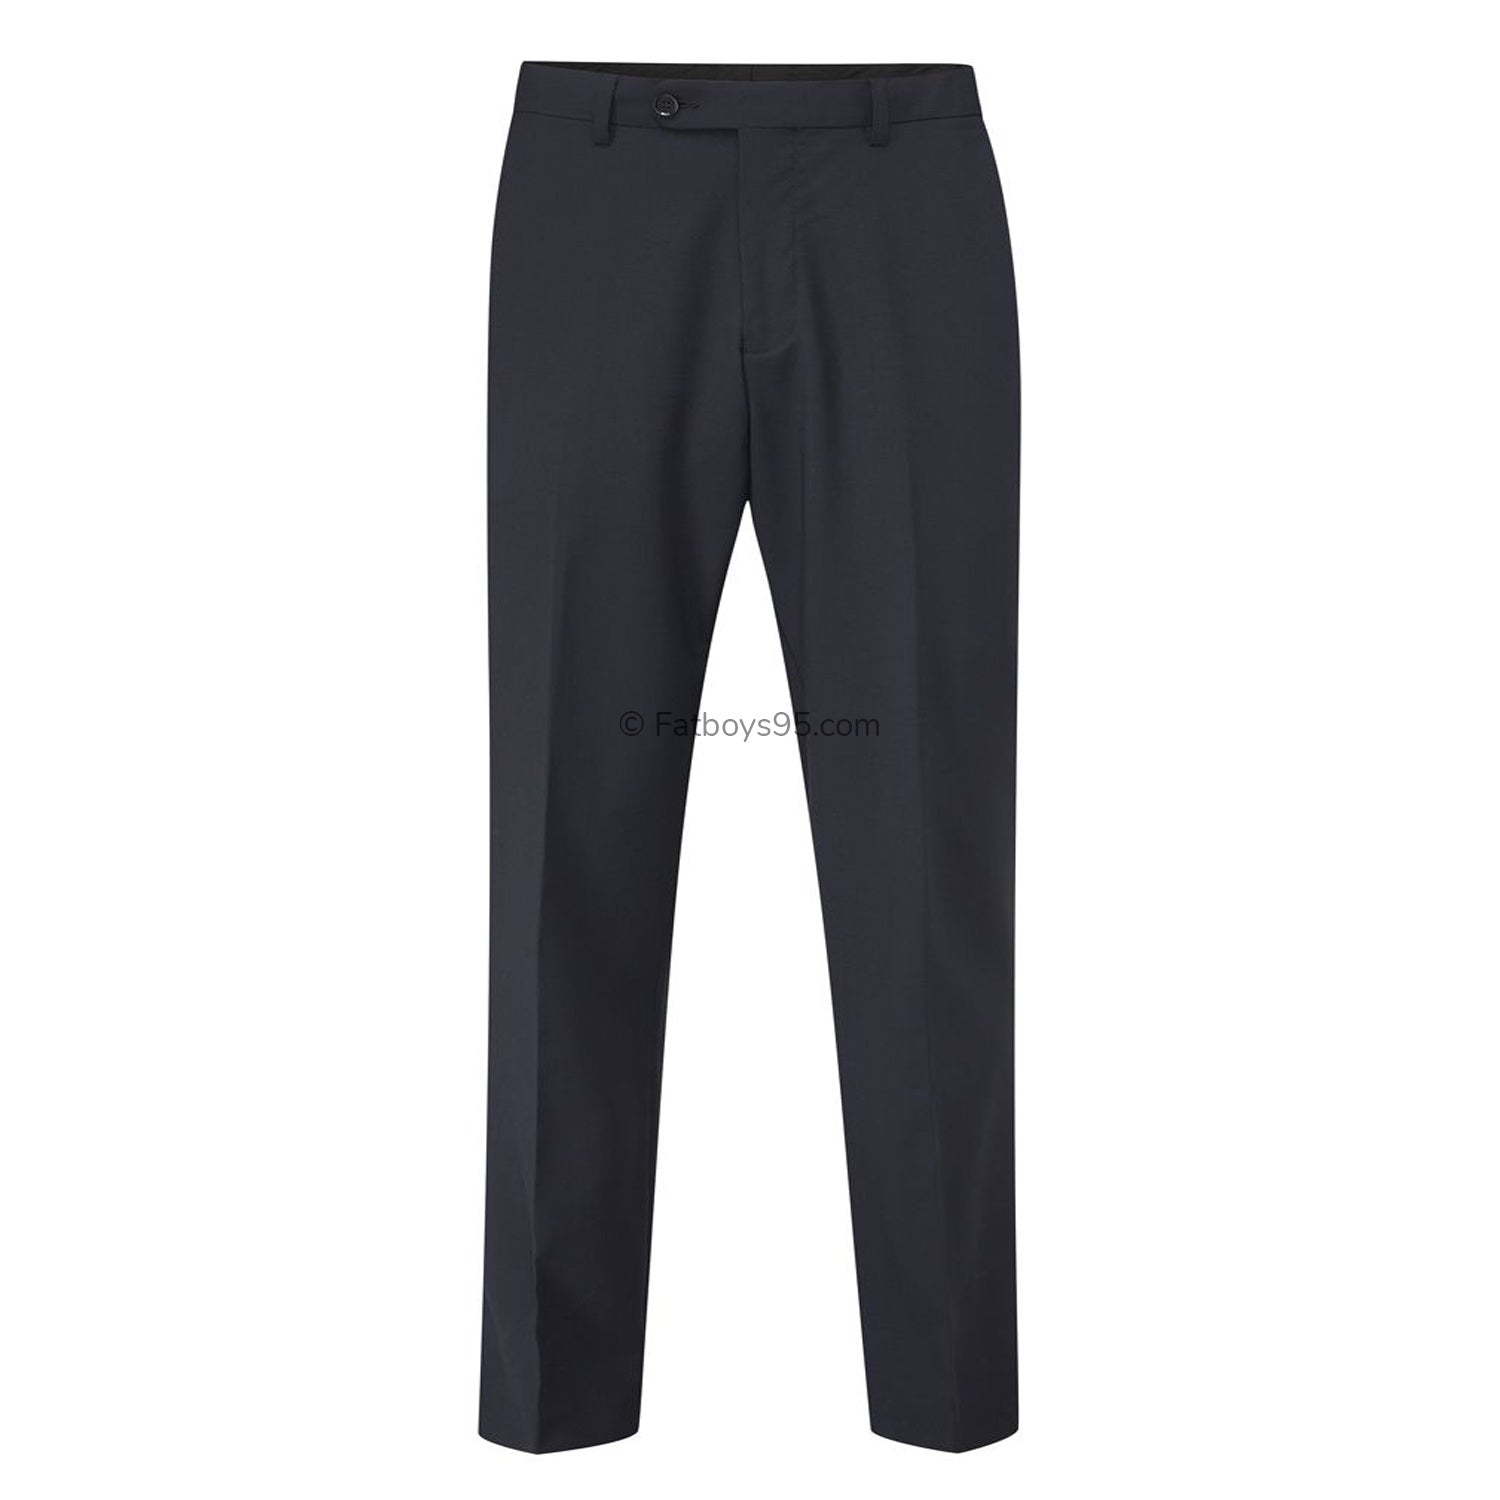 Skopes Suit Trousers - Darwin - MM7826 - Navy 1